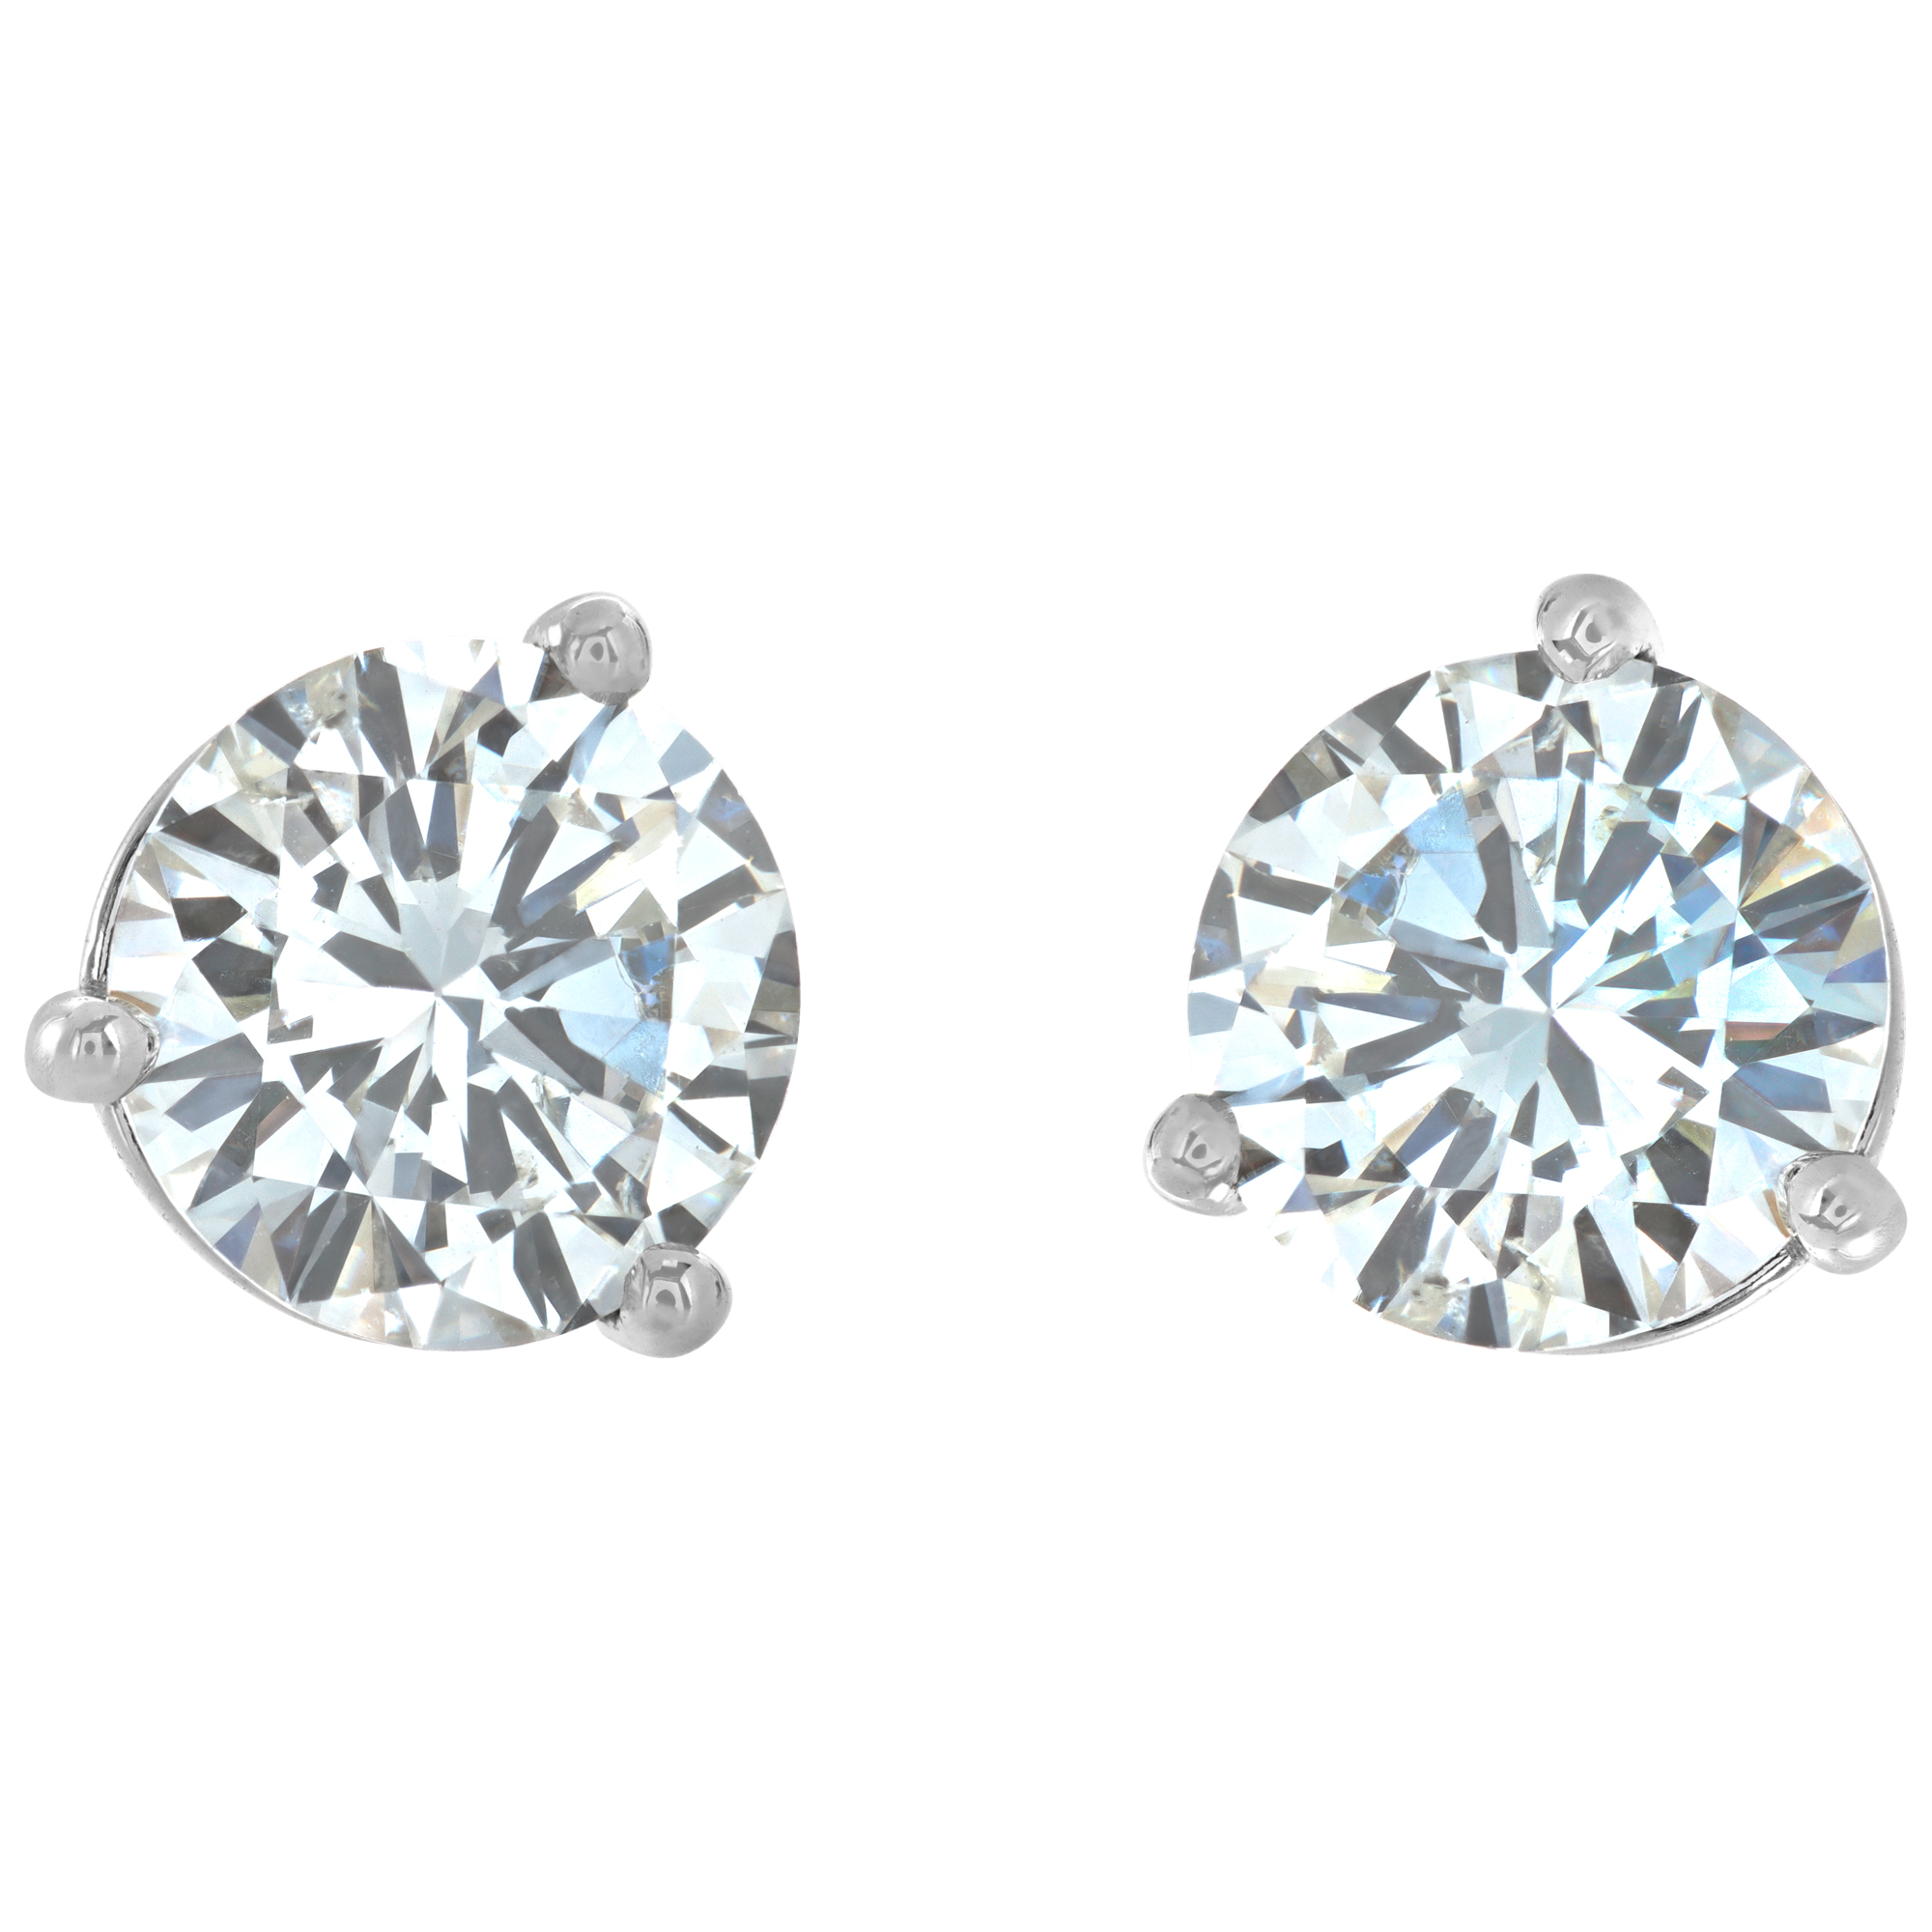 GIA certified diamond studs 1.01 carat & 1.05 carat (H color, SI2 clarity) (Stones)